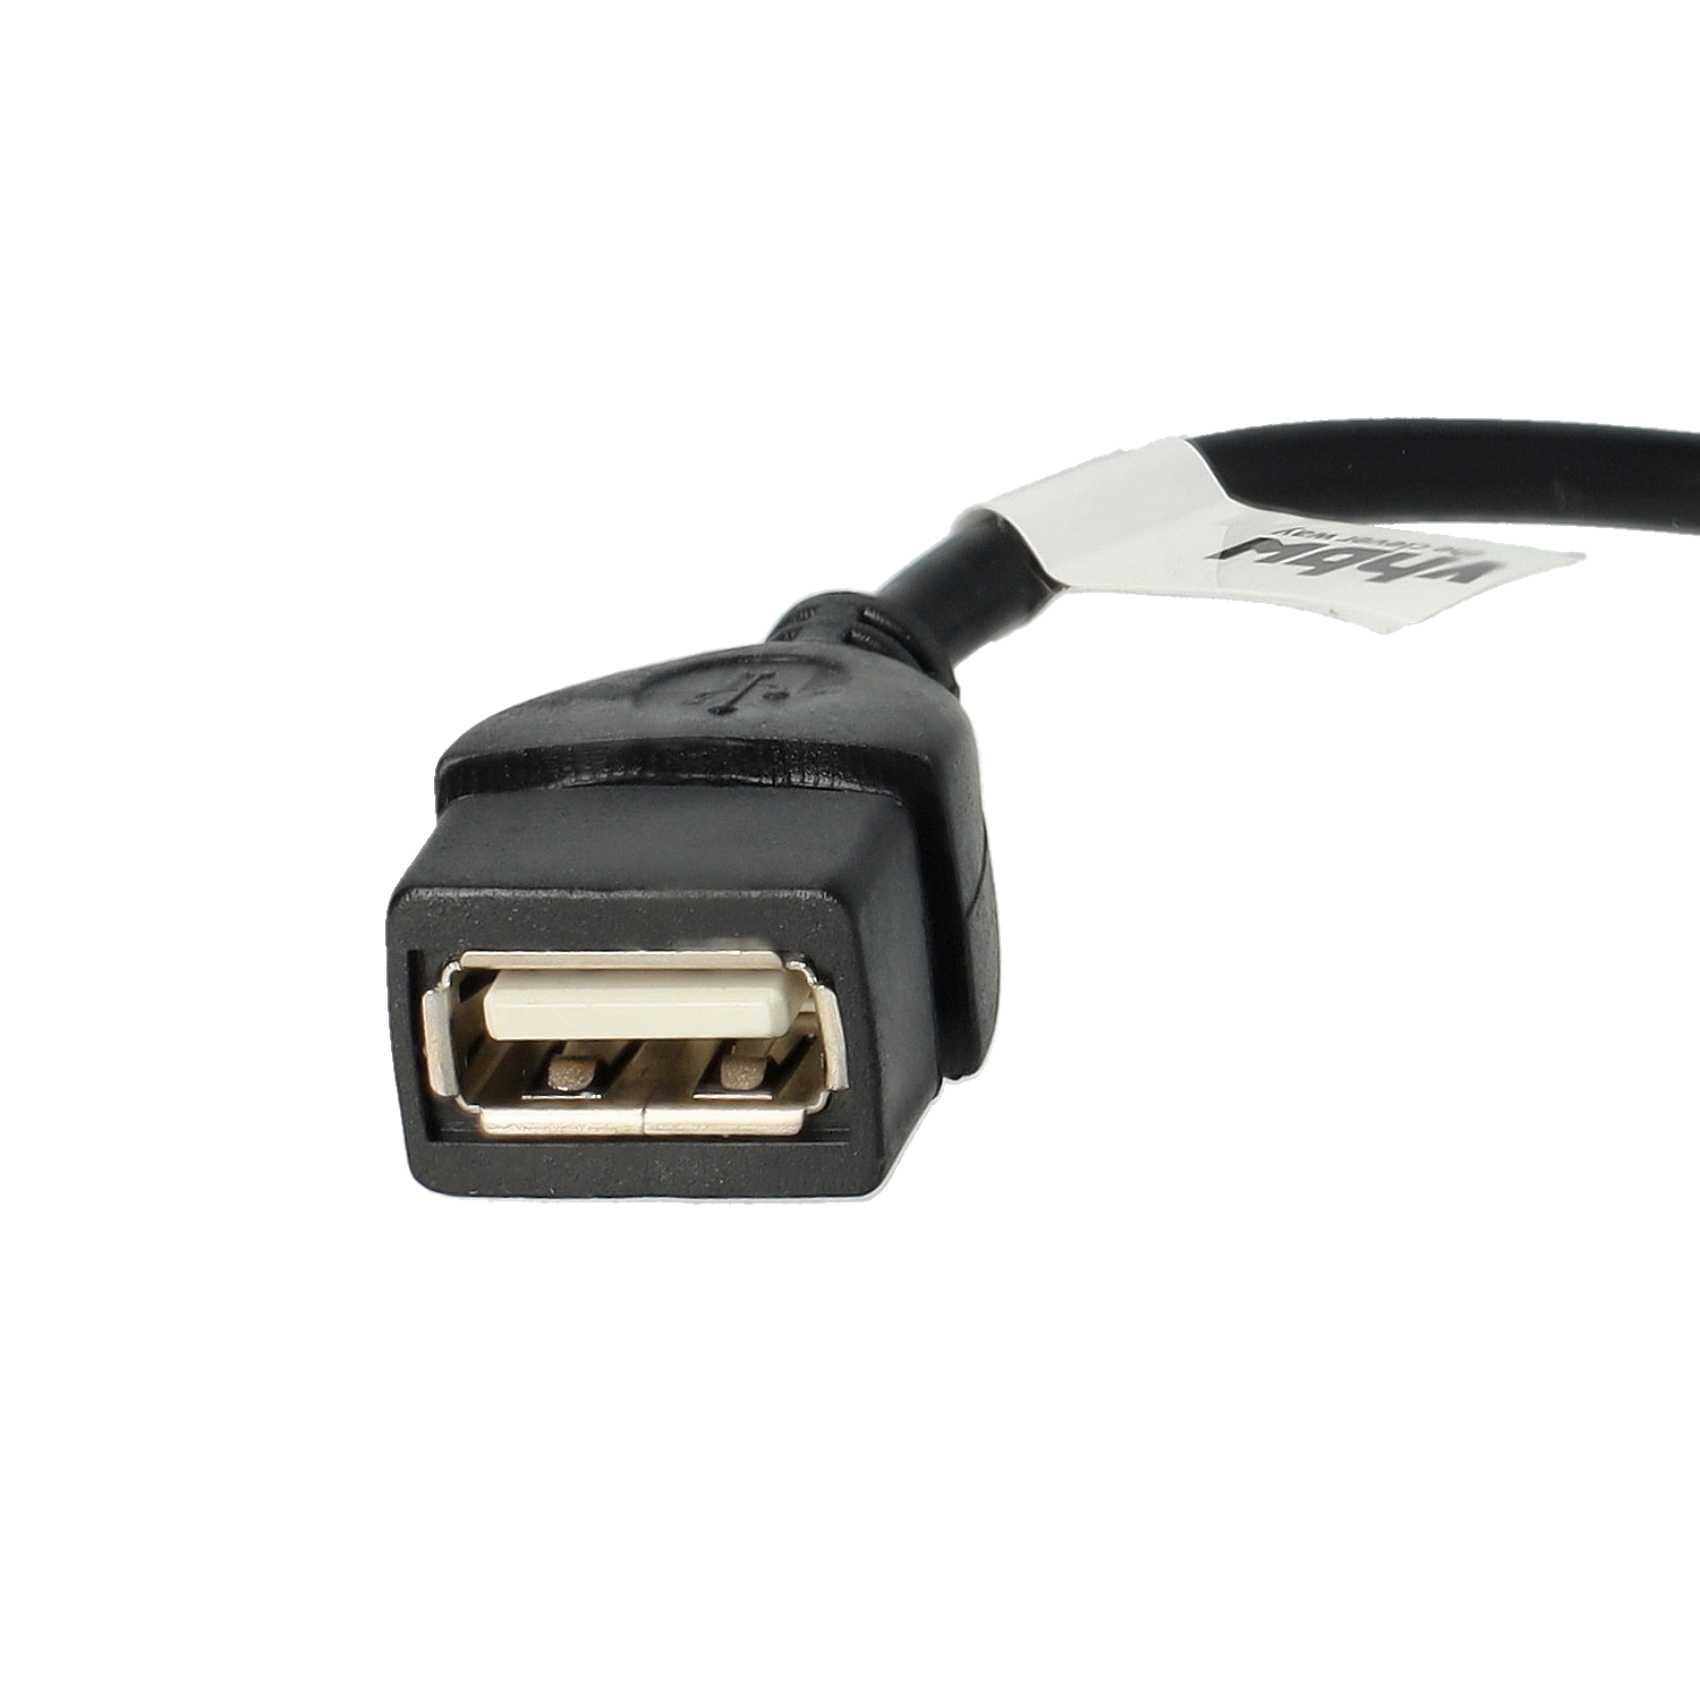 Adattatore OTG daMicro-USB a USB (femmina) per smartphone, tablet, laptop